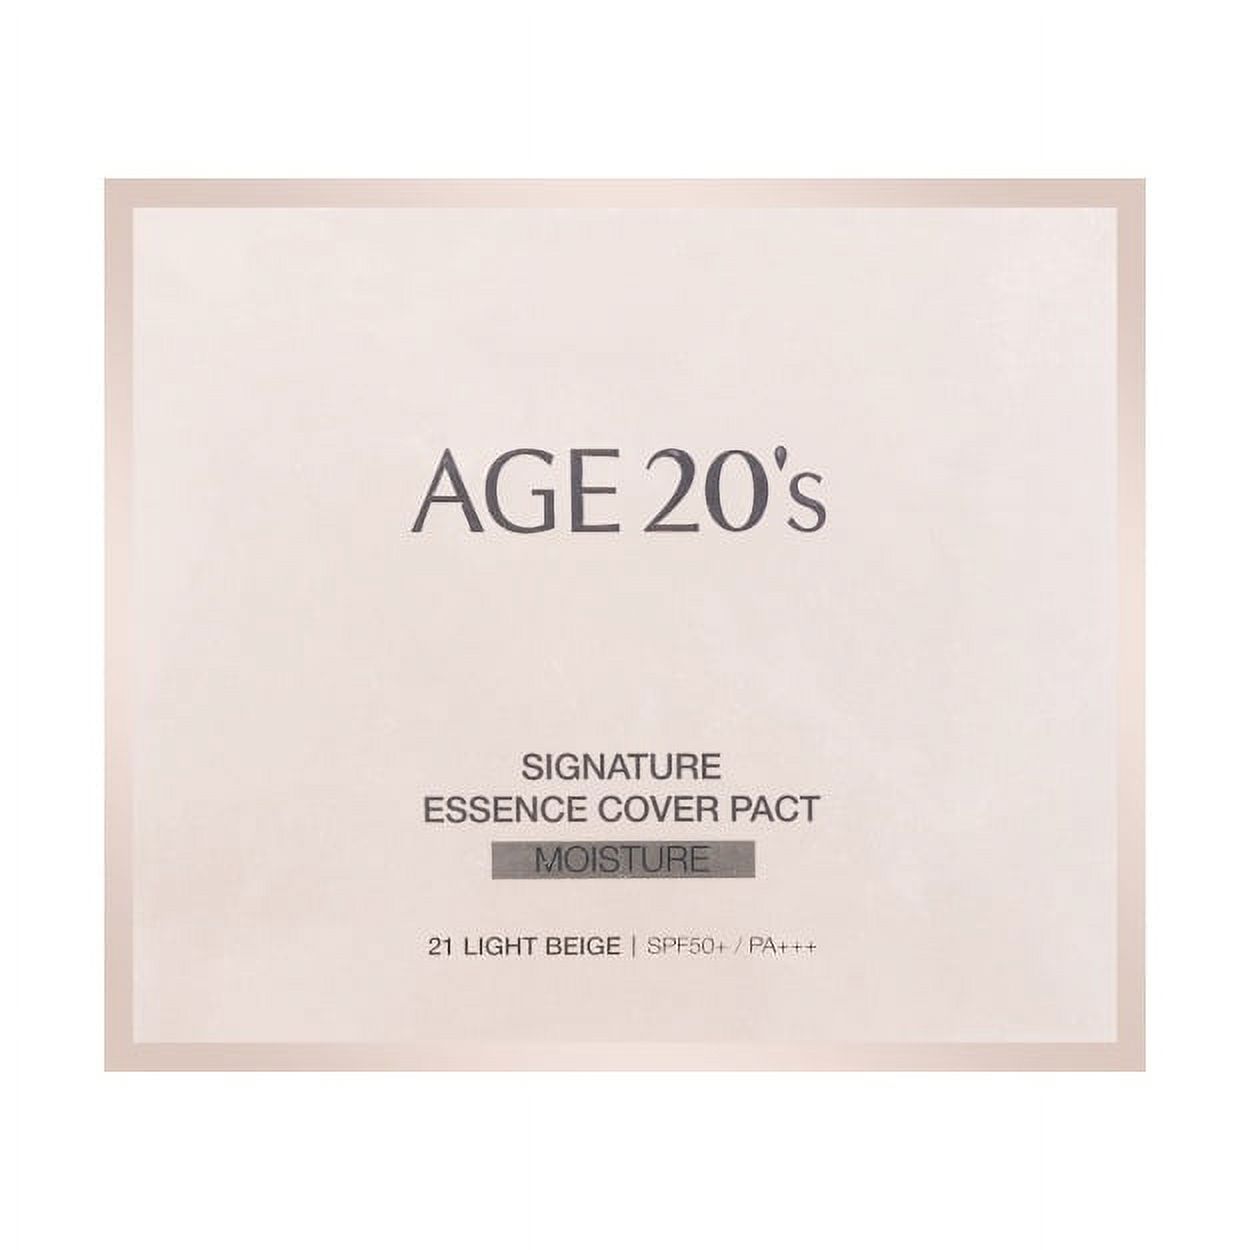 AGE 20'S Signature Essence Cover Pact Moisture SPF 50+ PA+++ No.23 Medium Beige - image 2 of 3